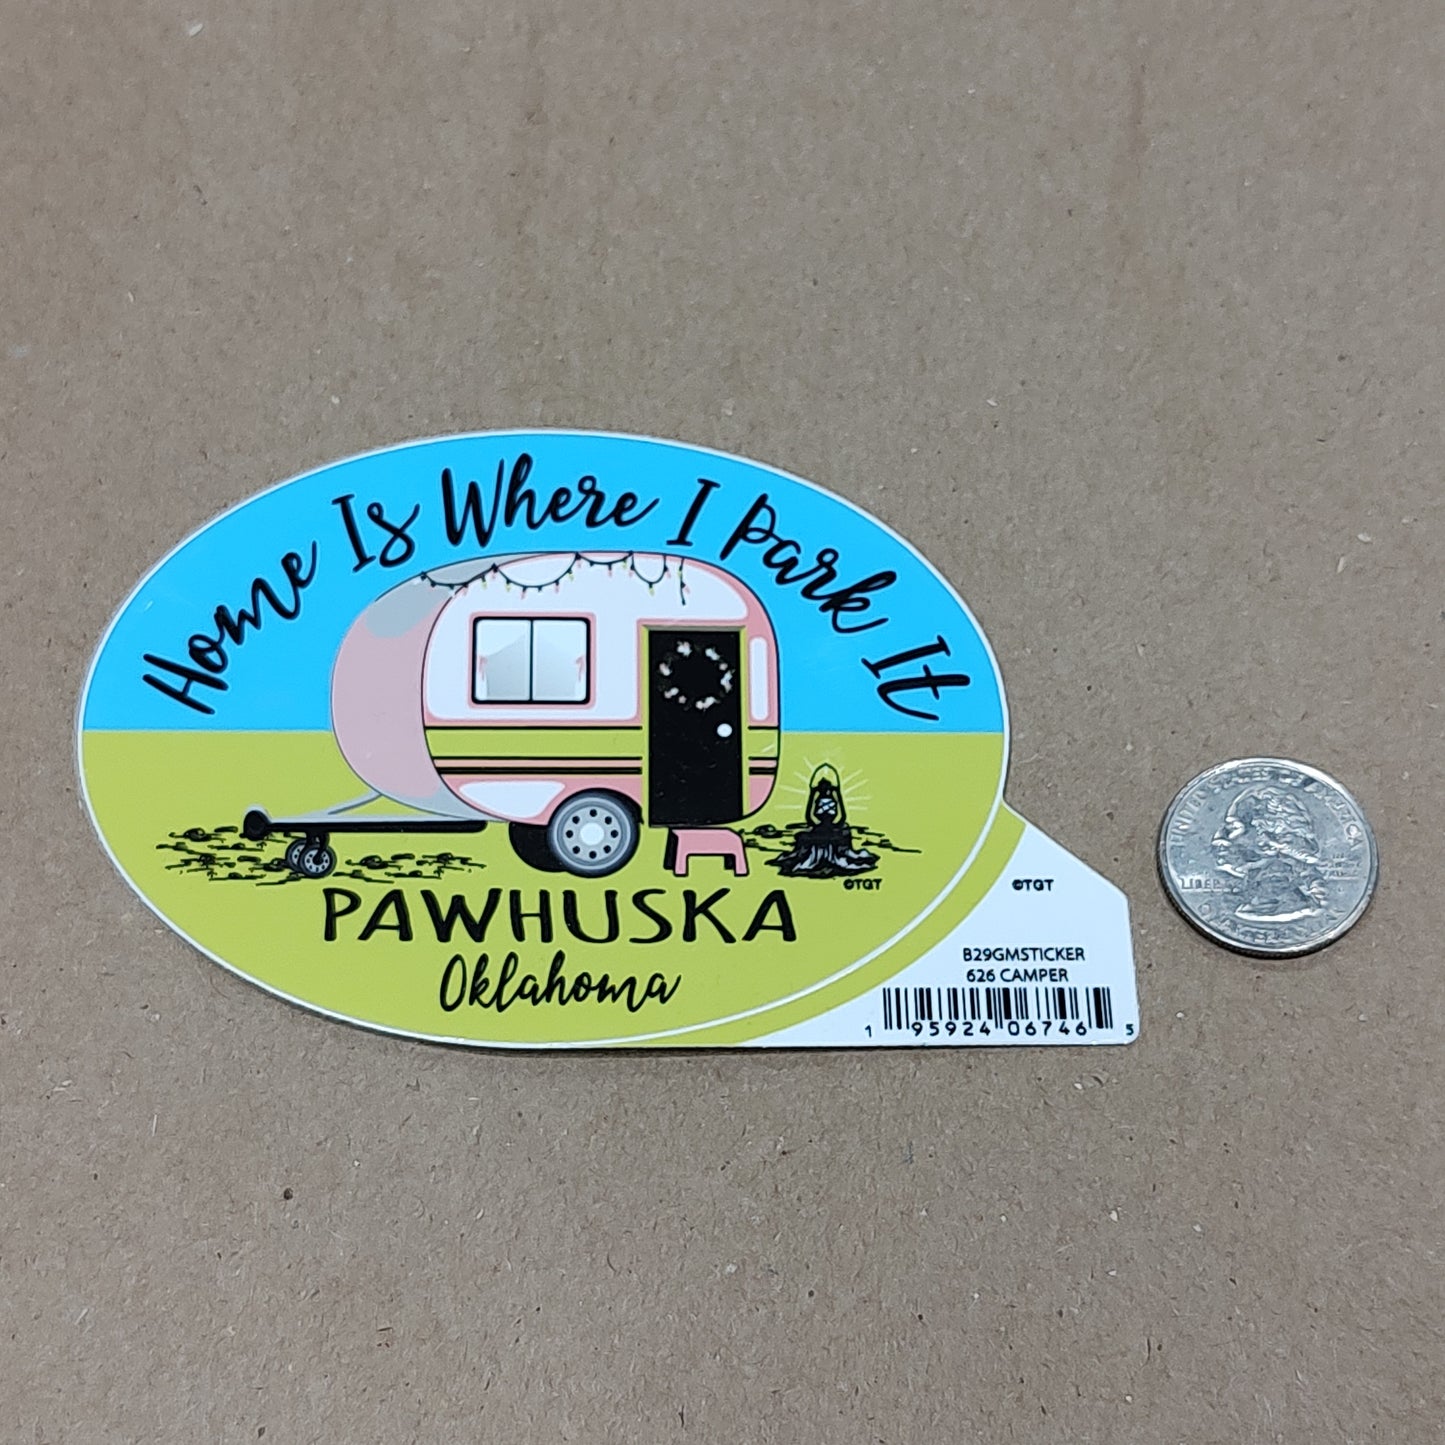 Home is where I park it Pawhuska, OK - sticker